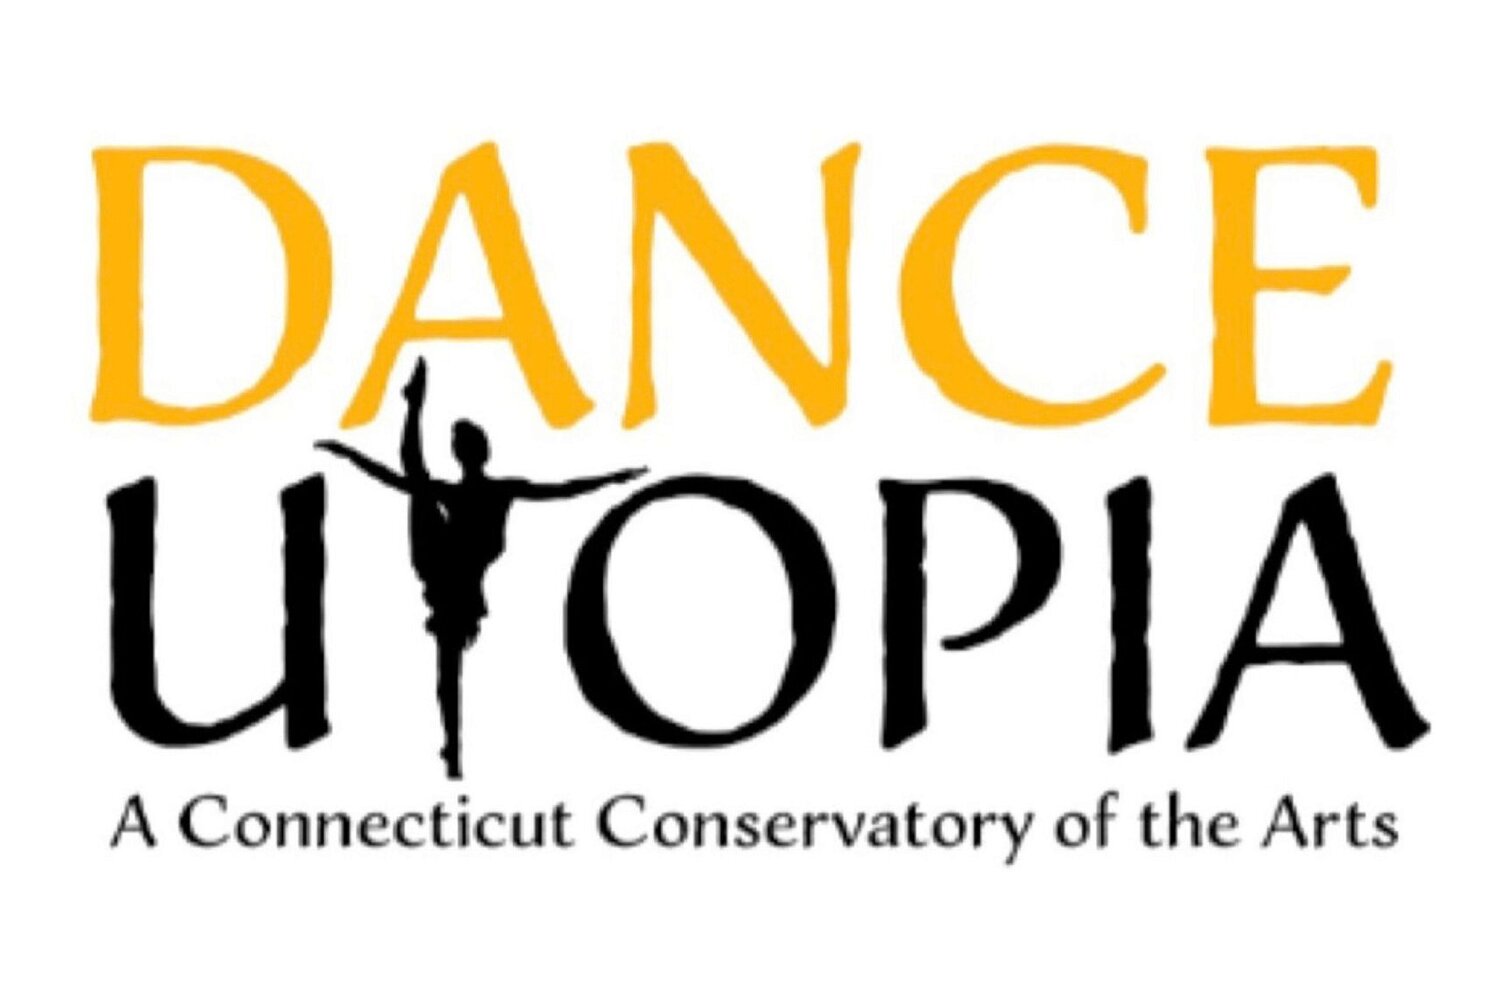 Dance Utopia CT